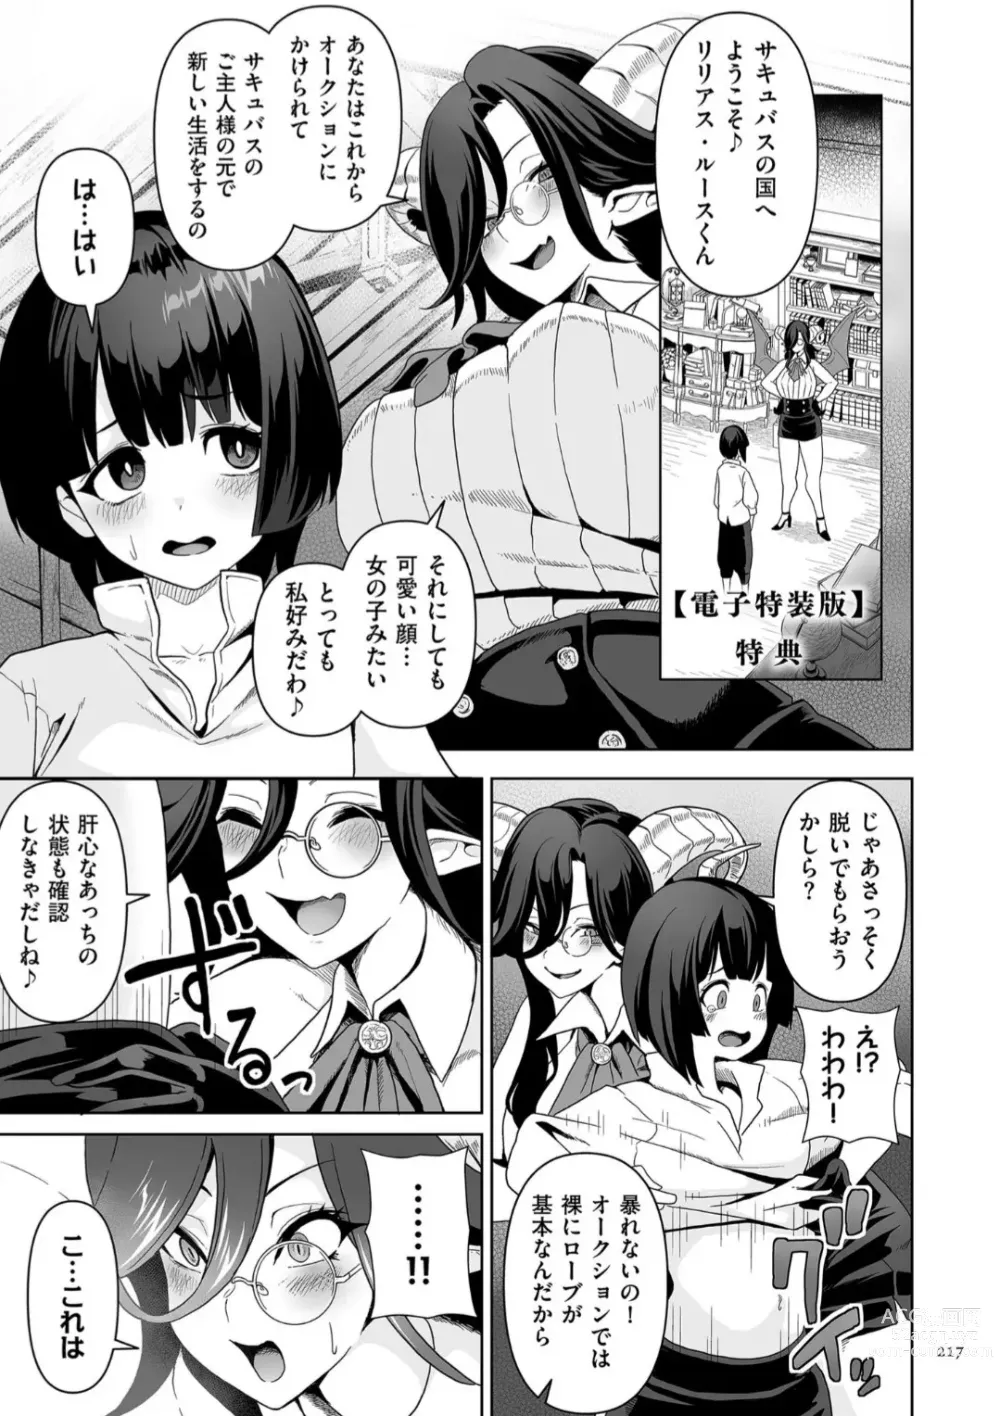 Page 217 of manga Succubus Kingdom